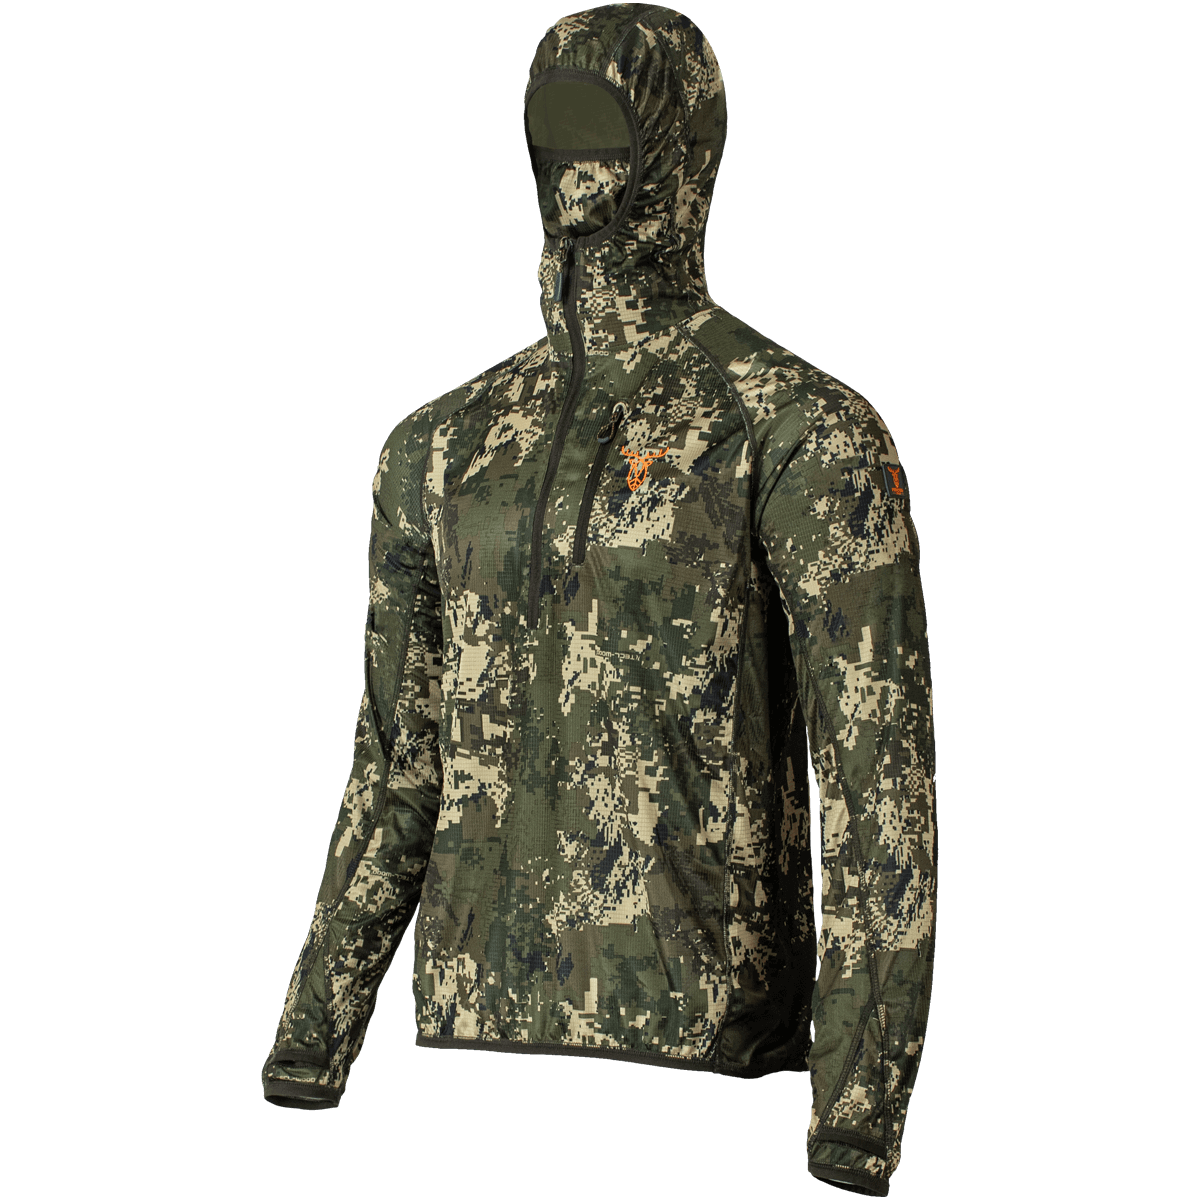  Pirscher Gear Ultralight Hoodie-Shirt (Optimax) - Cadeaus voor jagers